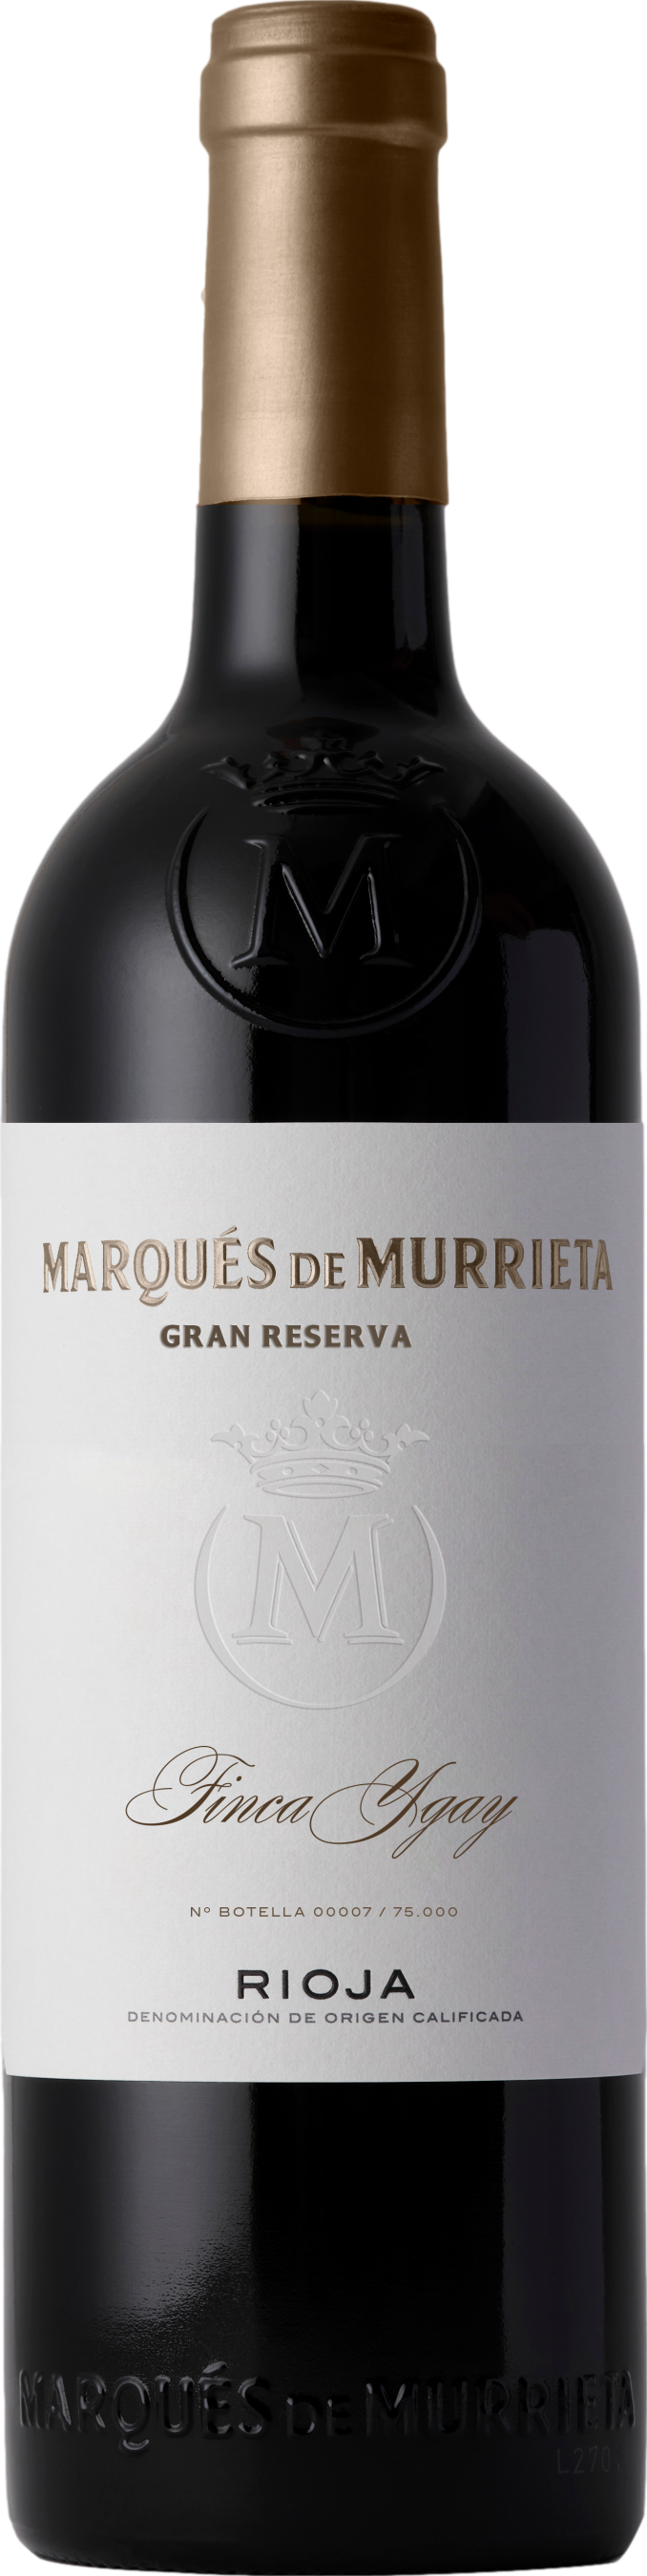 Marques de Murrieta Gran Reserva 2015 Marques de Murrieta 8wines DACH